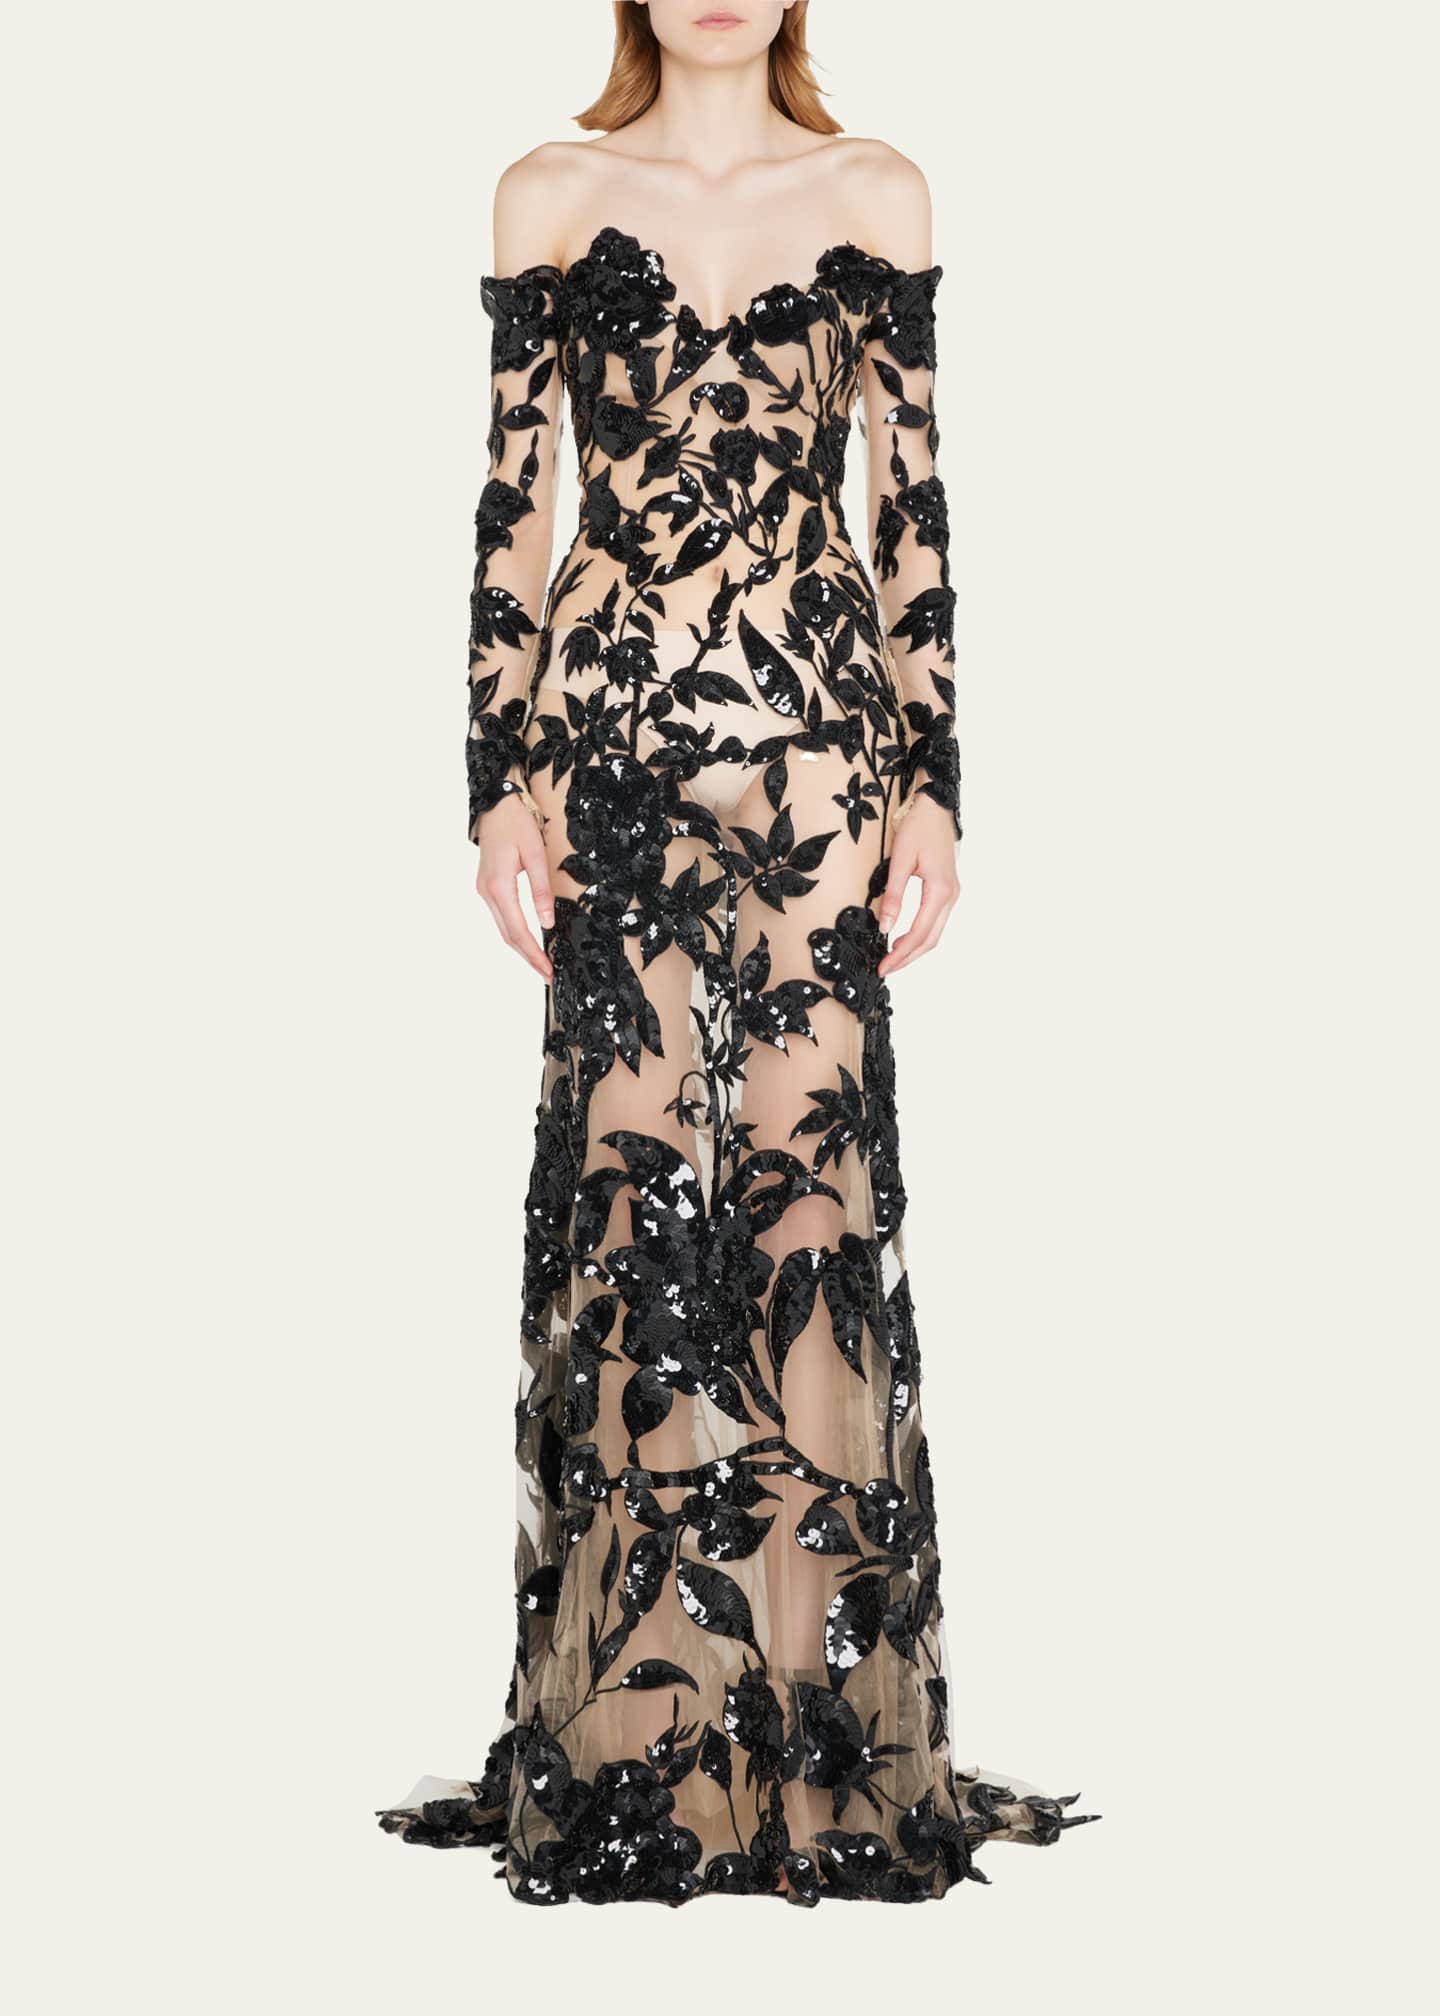 Oscar de la Renta Floral-Sequin Embroidered Evening Gown - Bergdorf Goodman